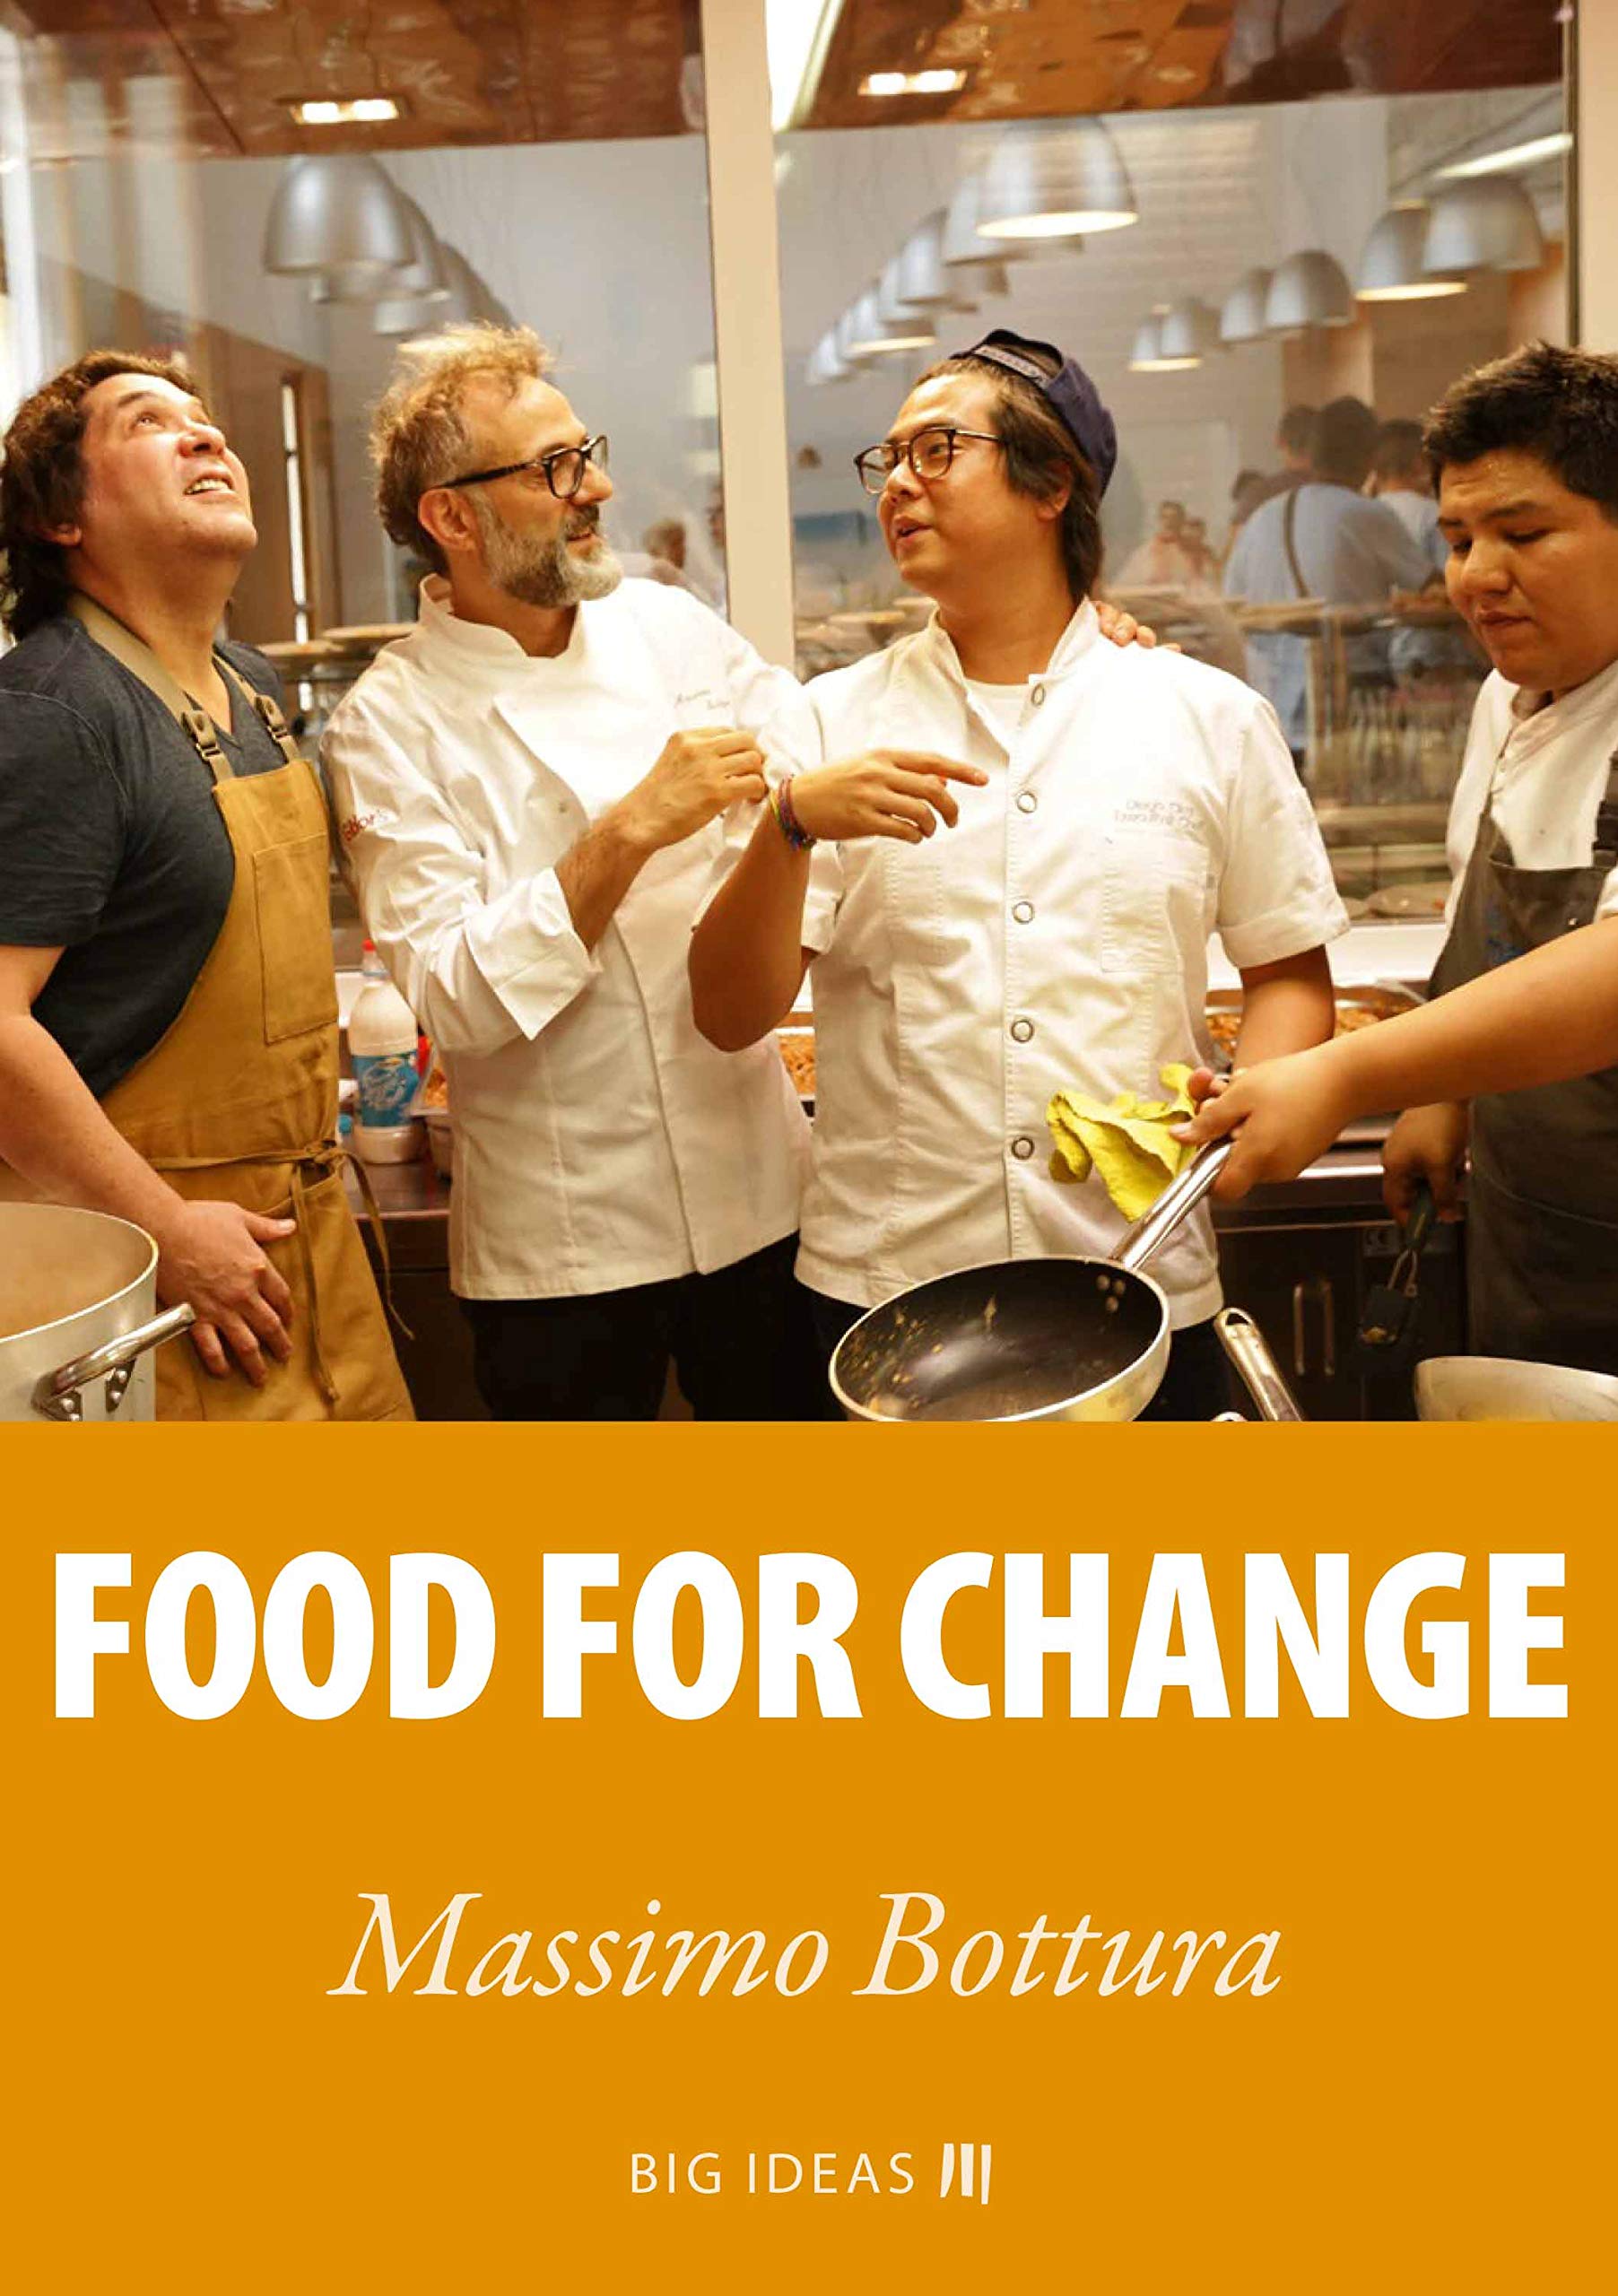 Food for change (Big Ideas Vol. 9) (Italian Edition)